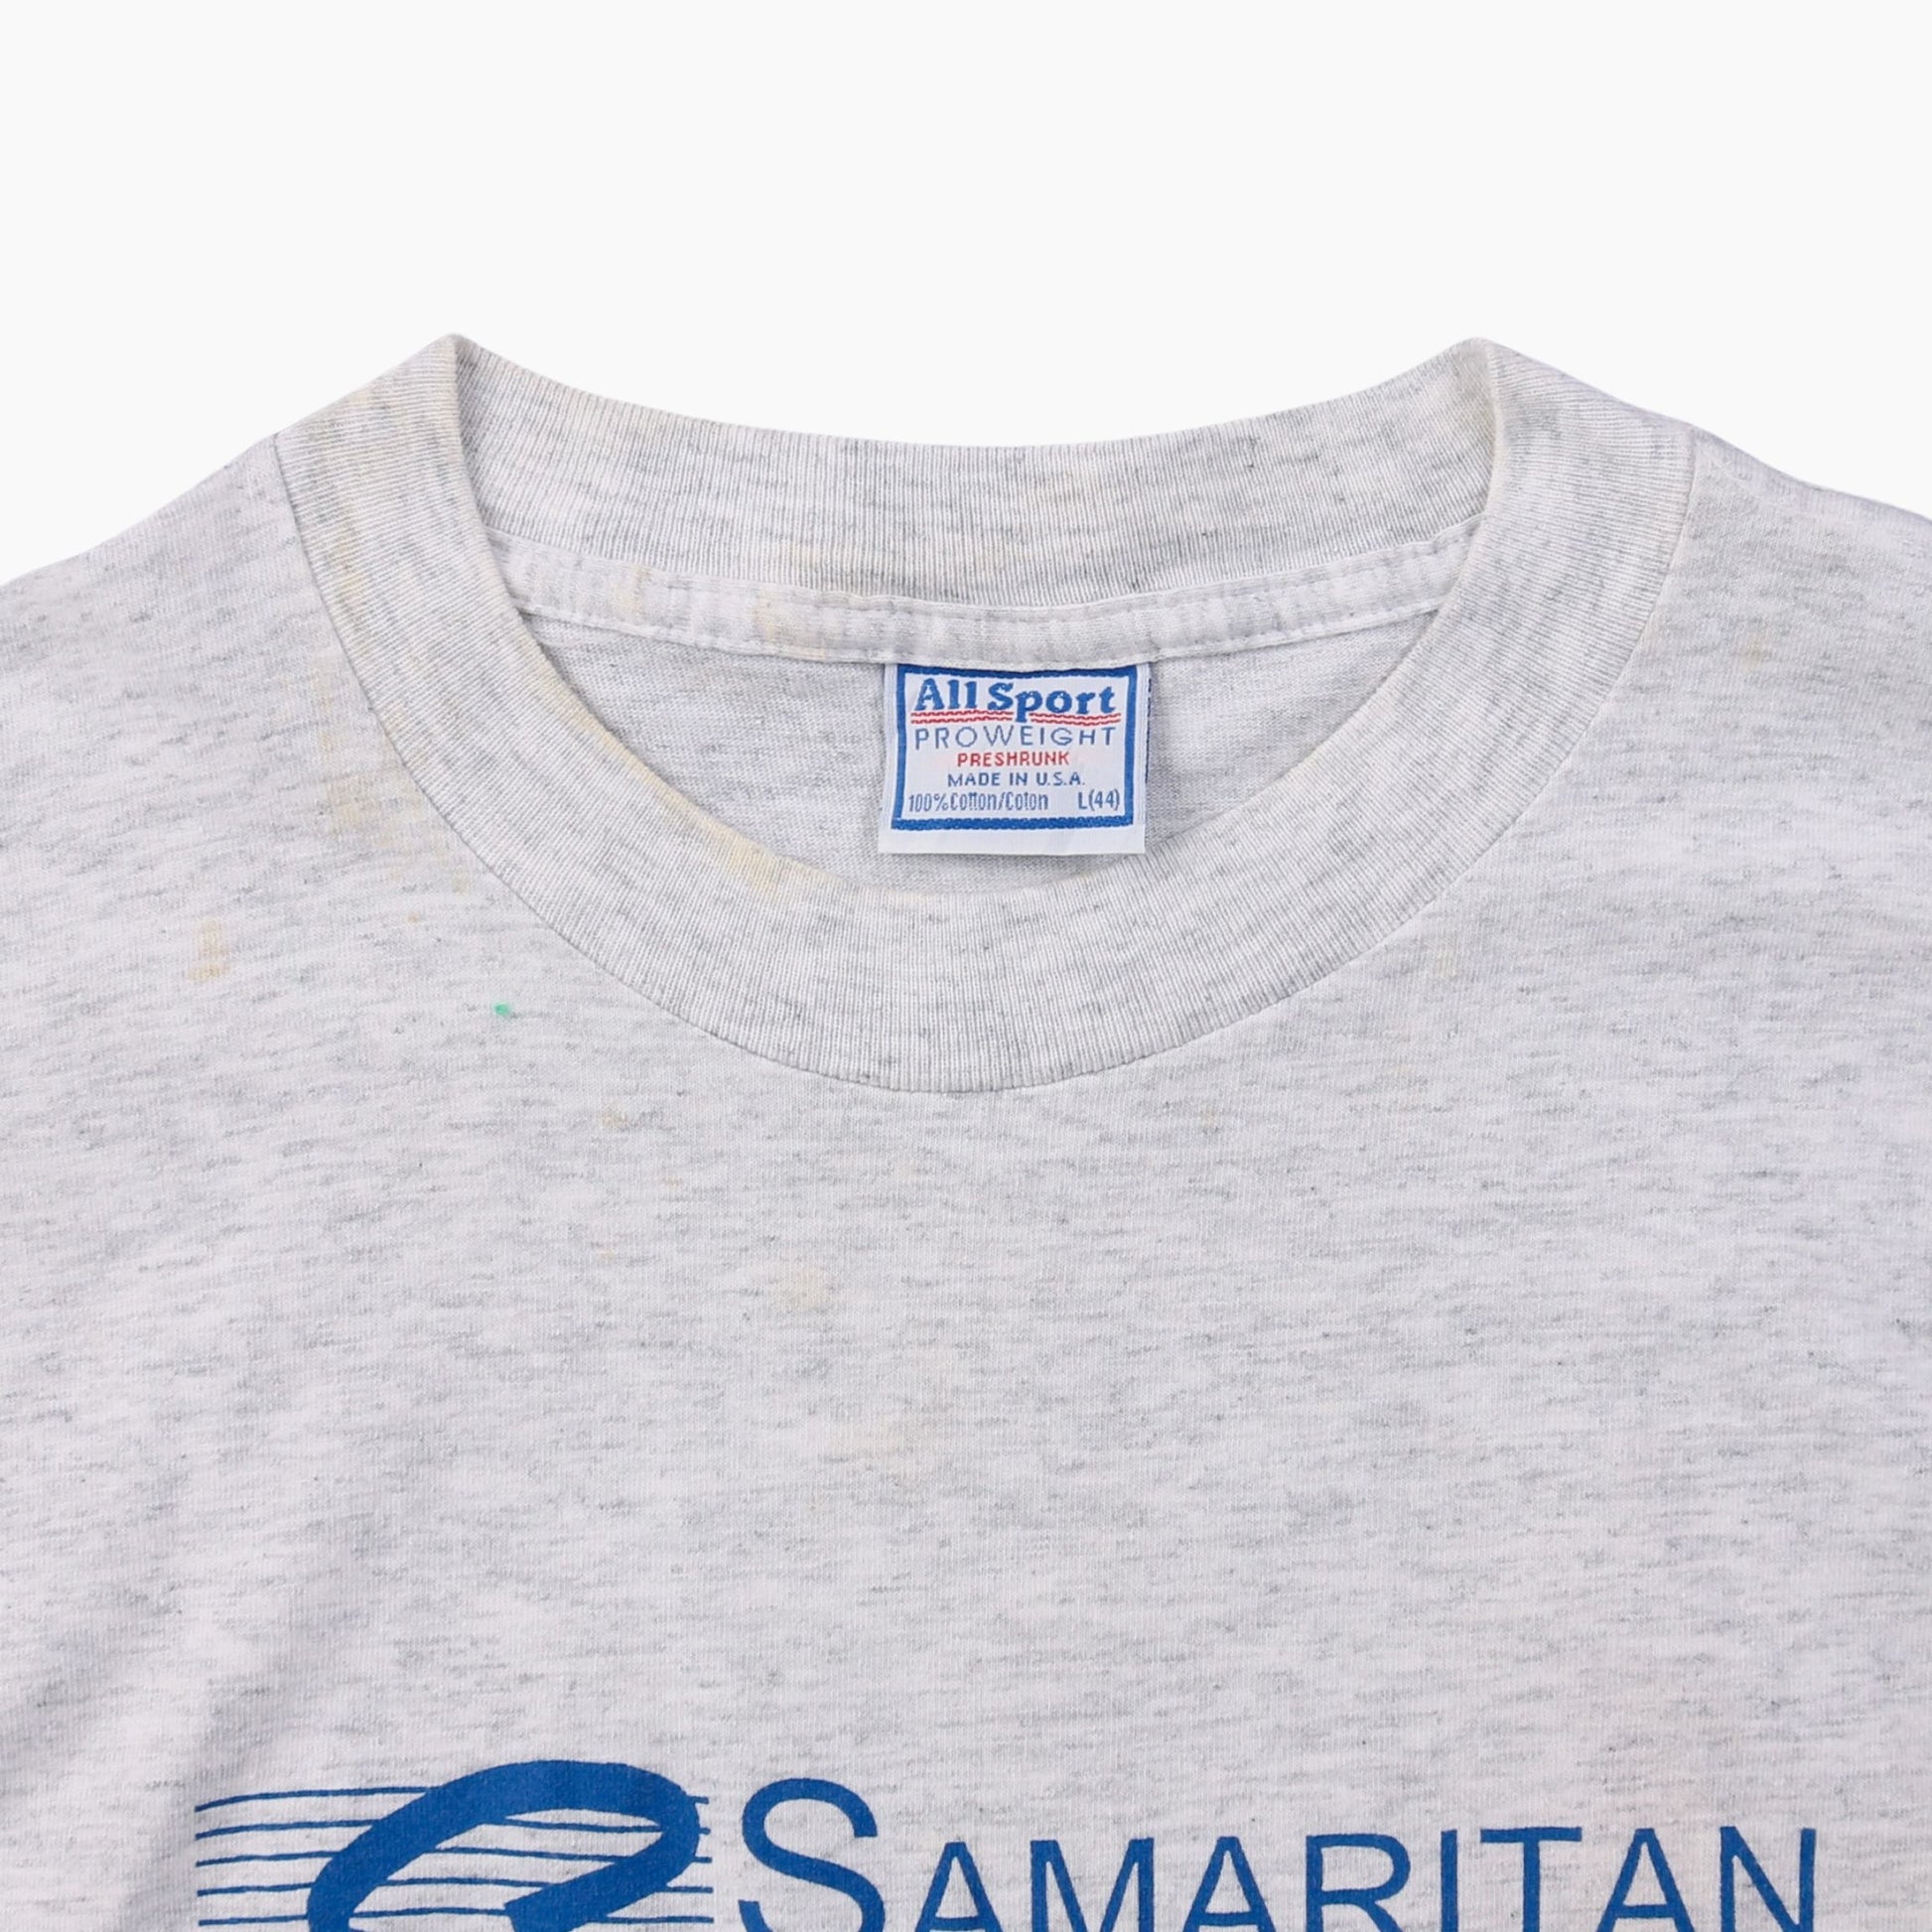 'Samaritan Healthcare' T-Shirt - American Madness